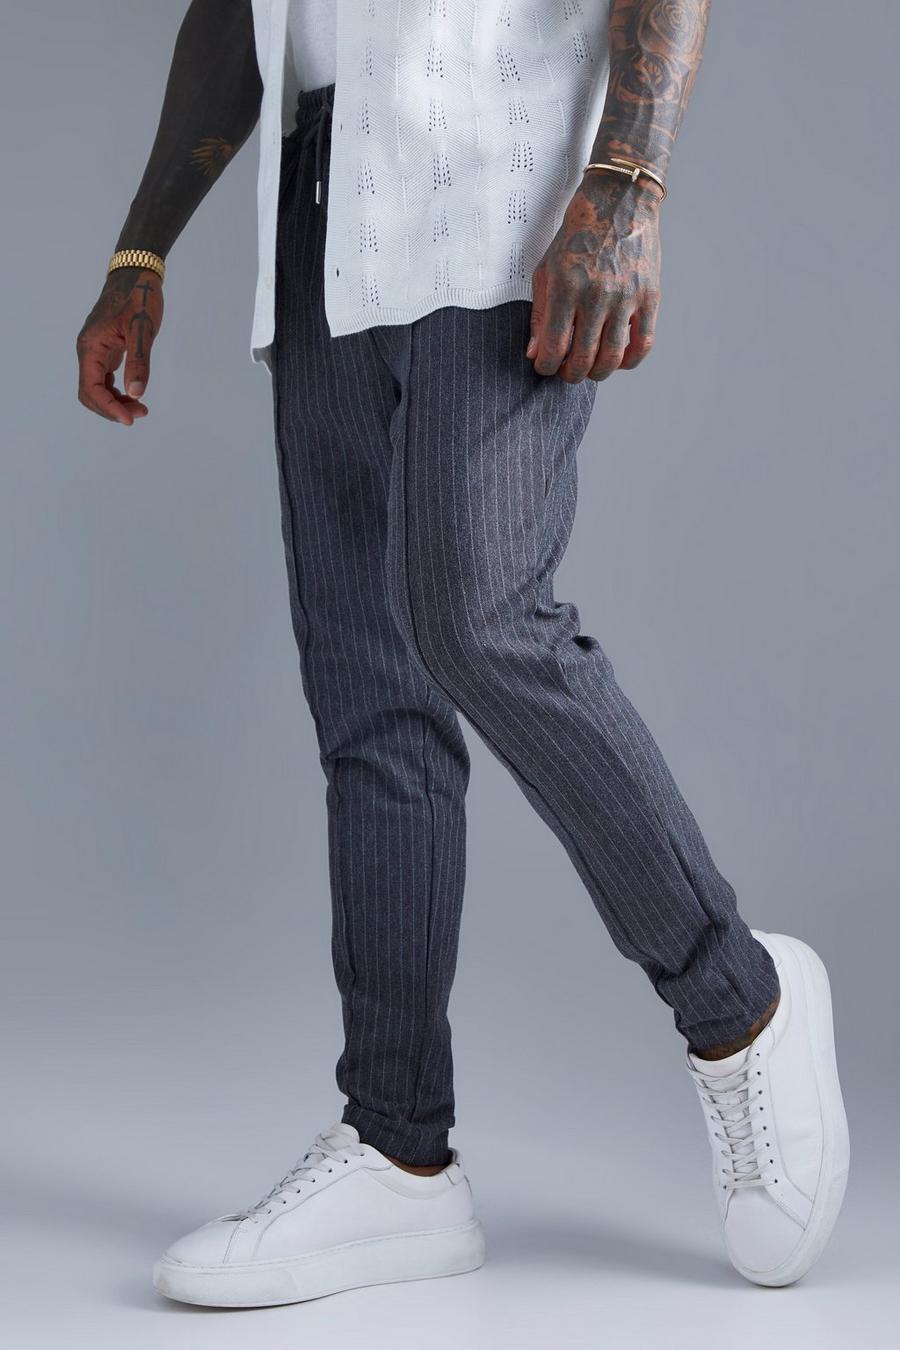 Pantaloni tuta Skinny Fit in jacquard a righe verticali, Dark grey grigio